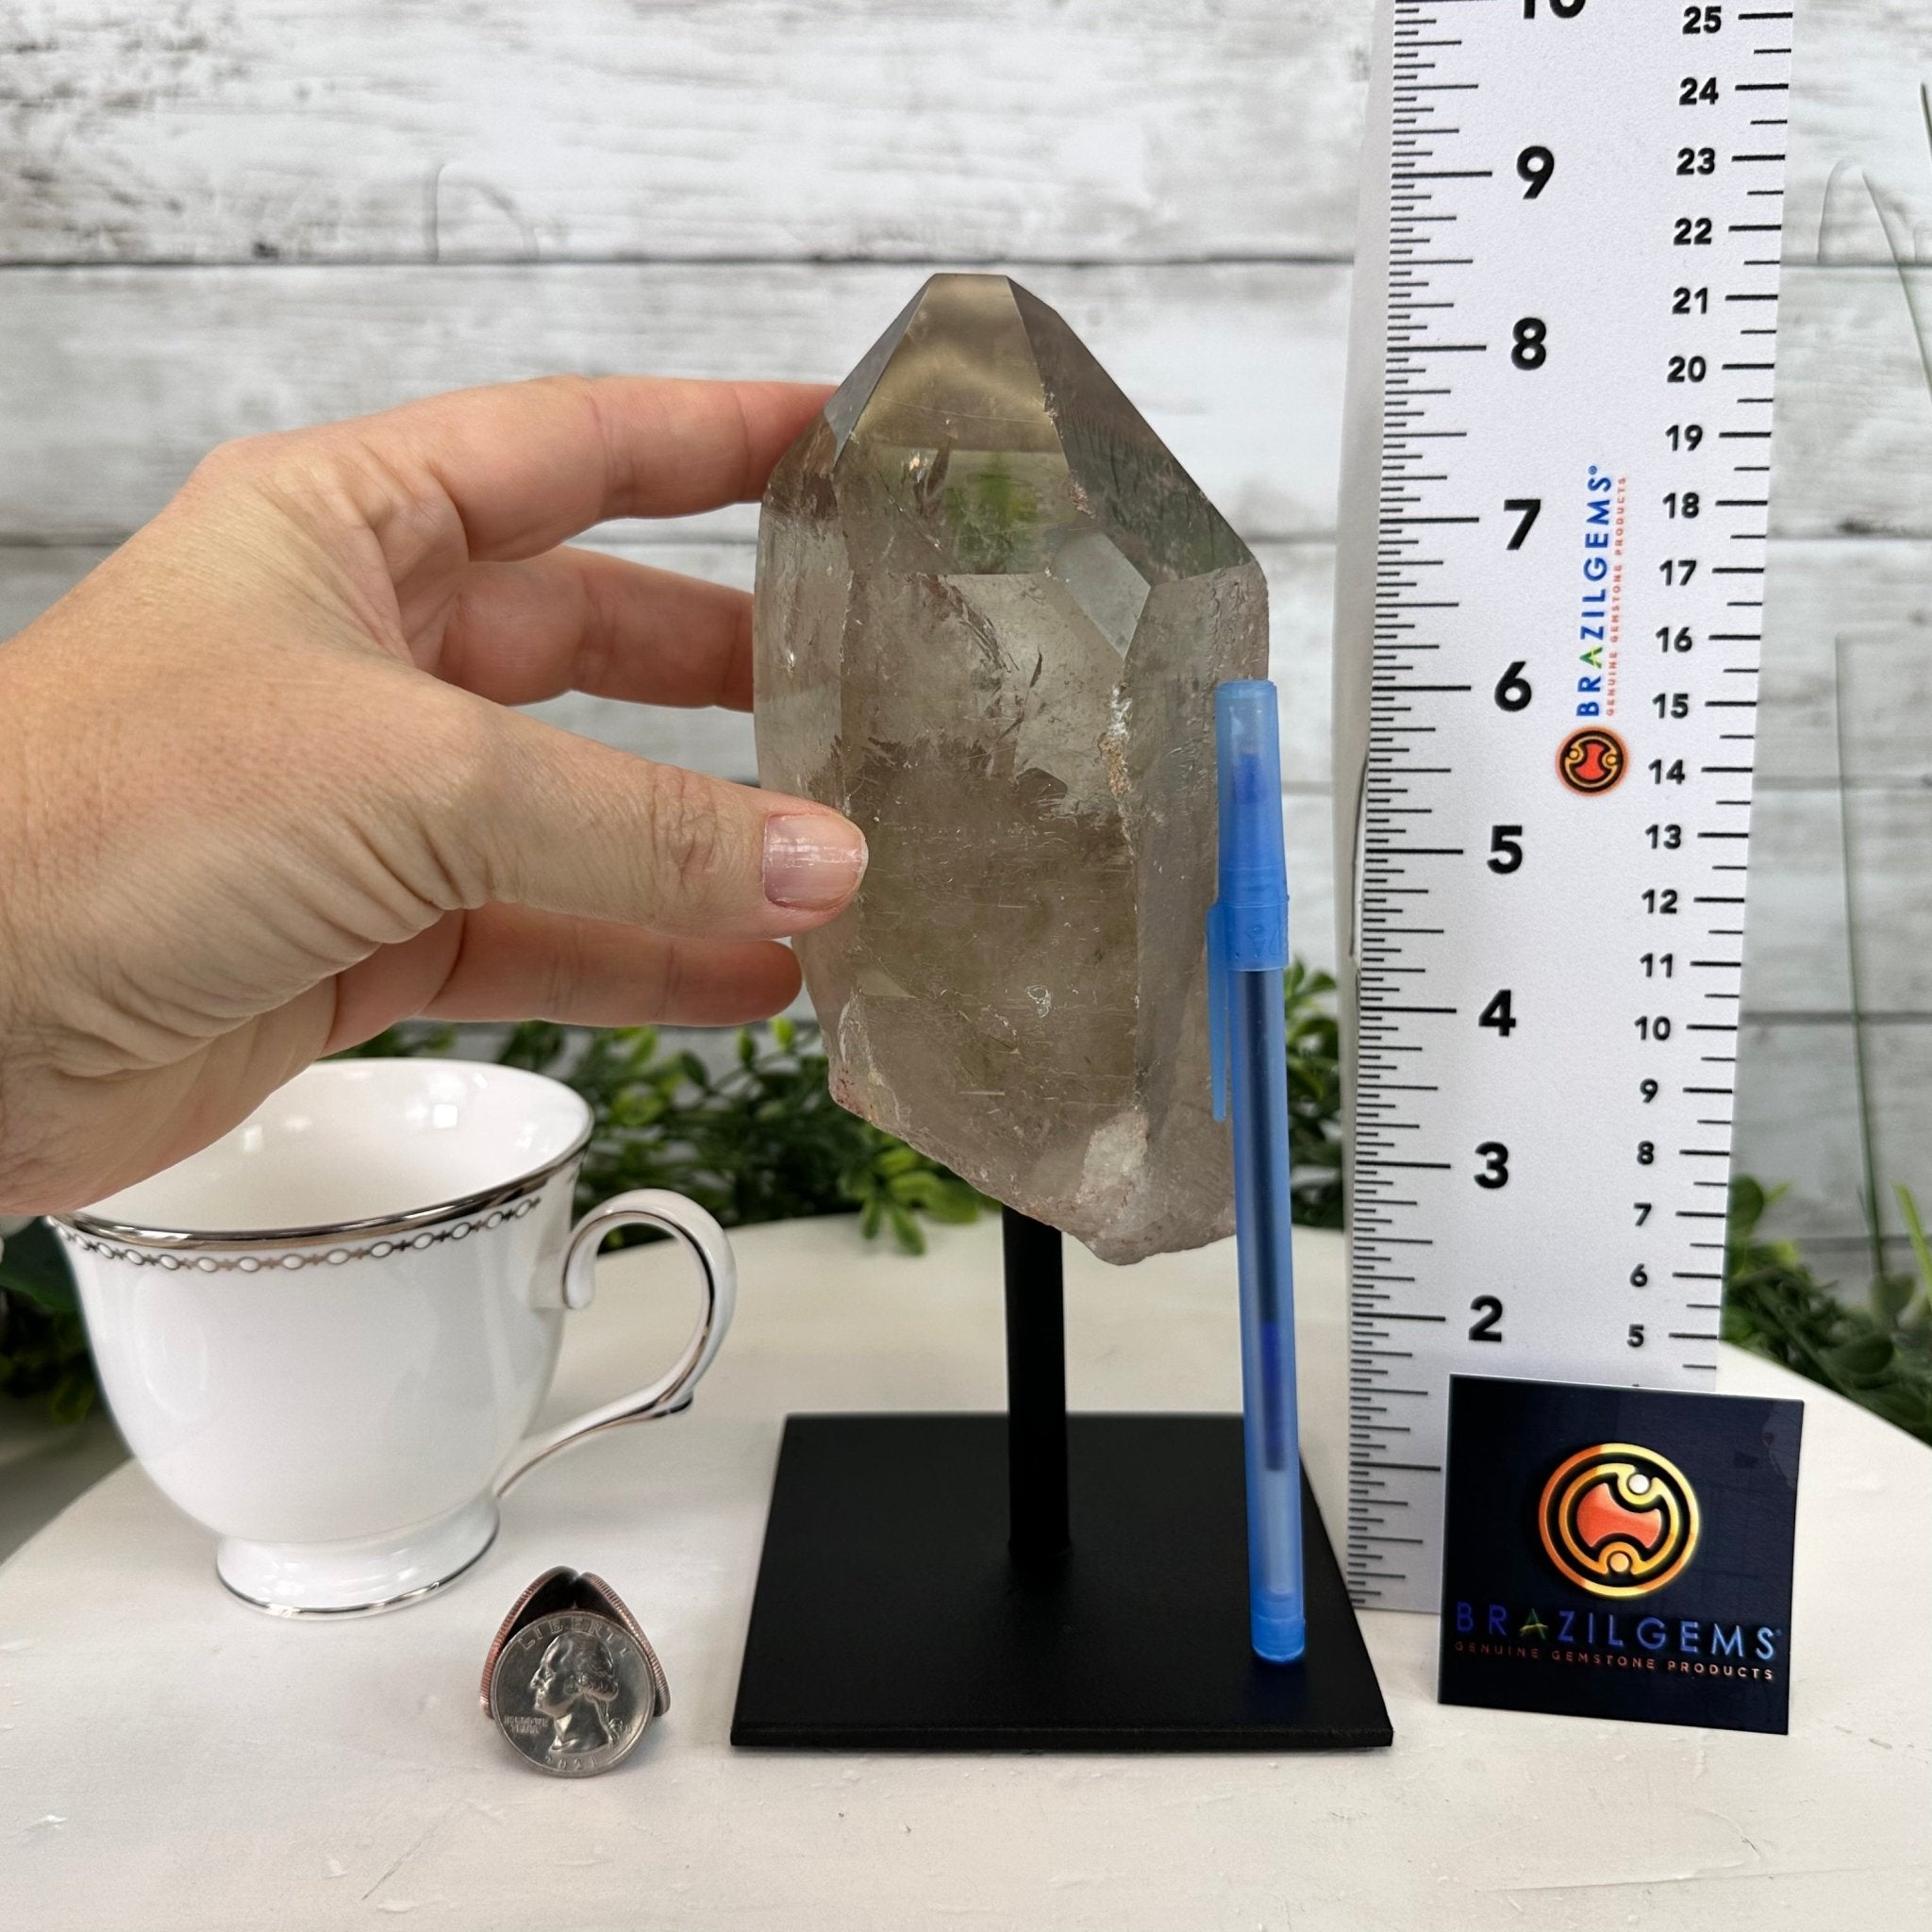 Smoky Quartz Crystal Point on a Metal Stand, 8.1" Tall Model #3122SQ-004 by Brazil Gems - Brazil GemsBrazil GemsSmoky Quartz Crystal Point on a Metal Stand, 8.1" Tall Model #3122SQ-004 by Brazil GemsCrystal Points3122SQ-004